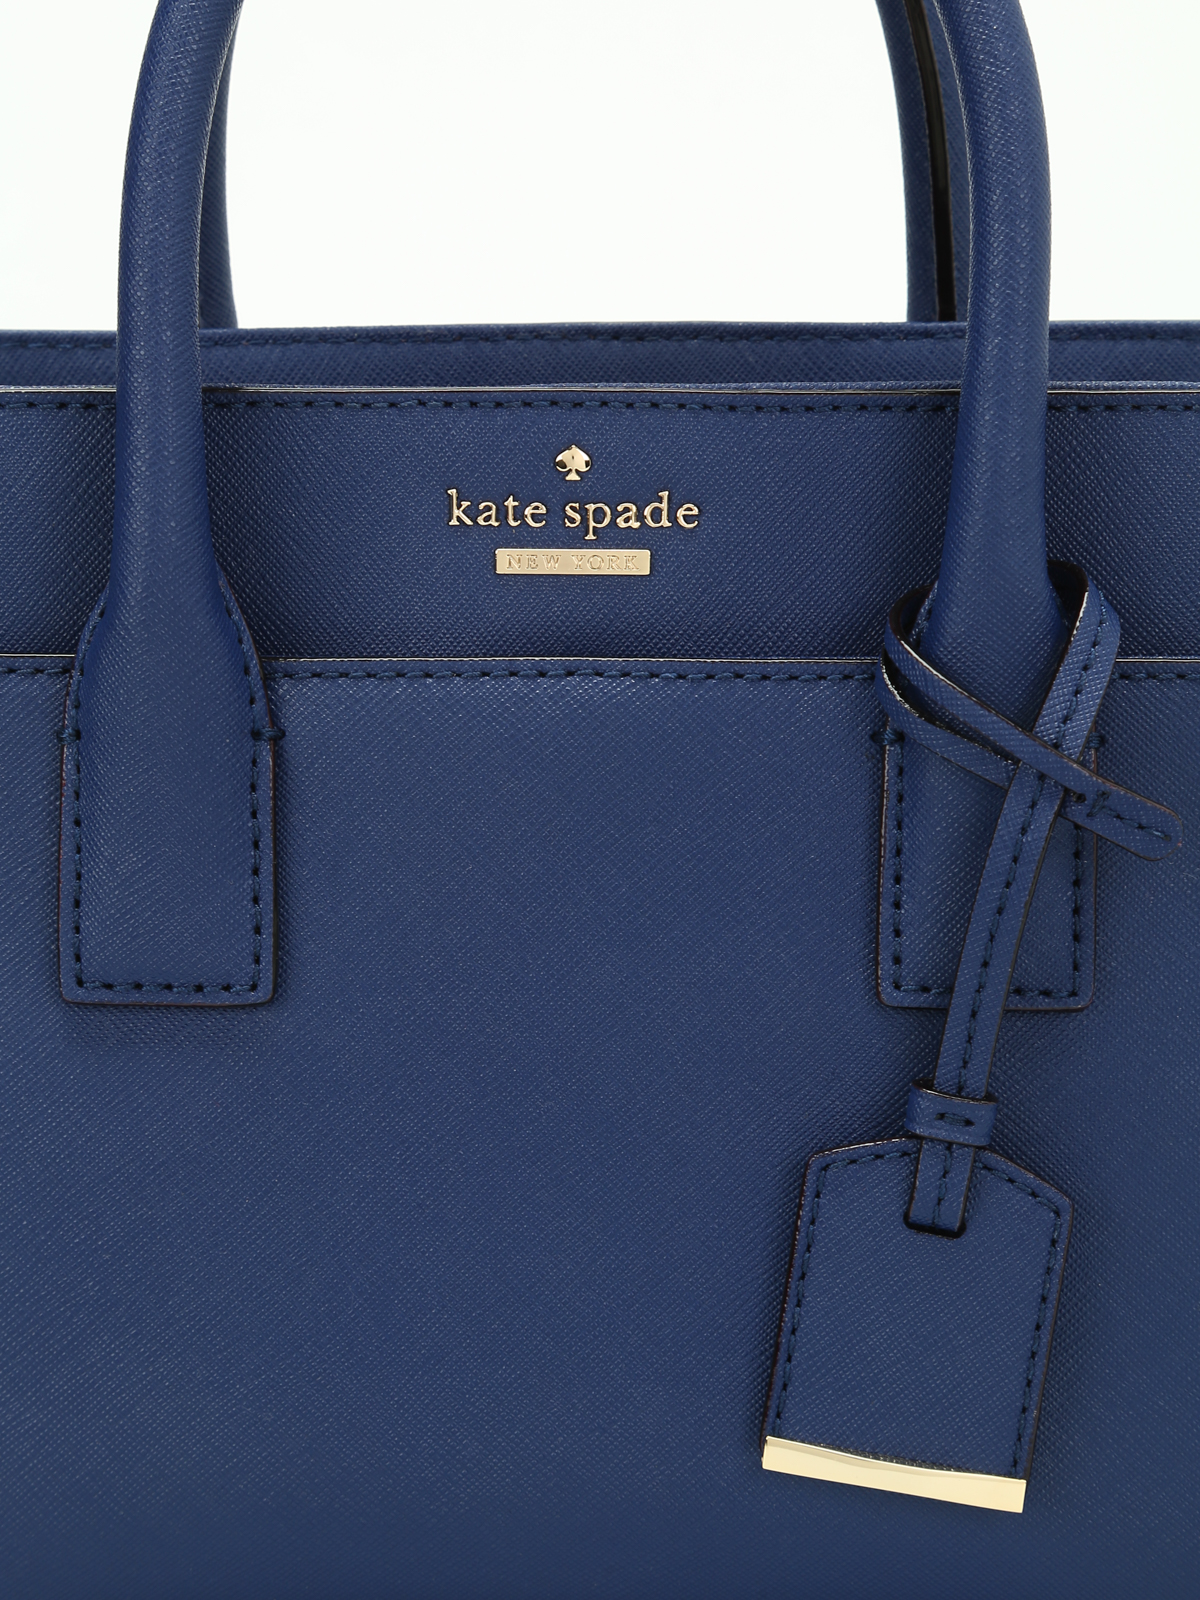 Kate Spade New York Mini Candace Bag